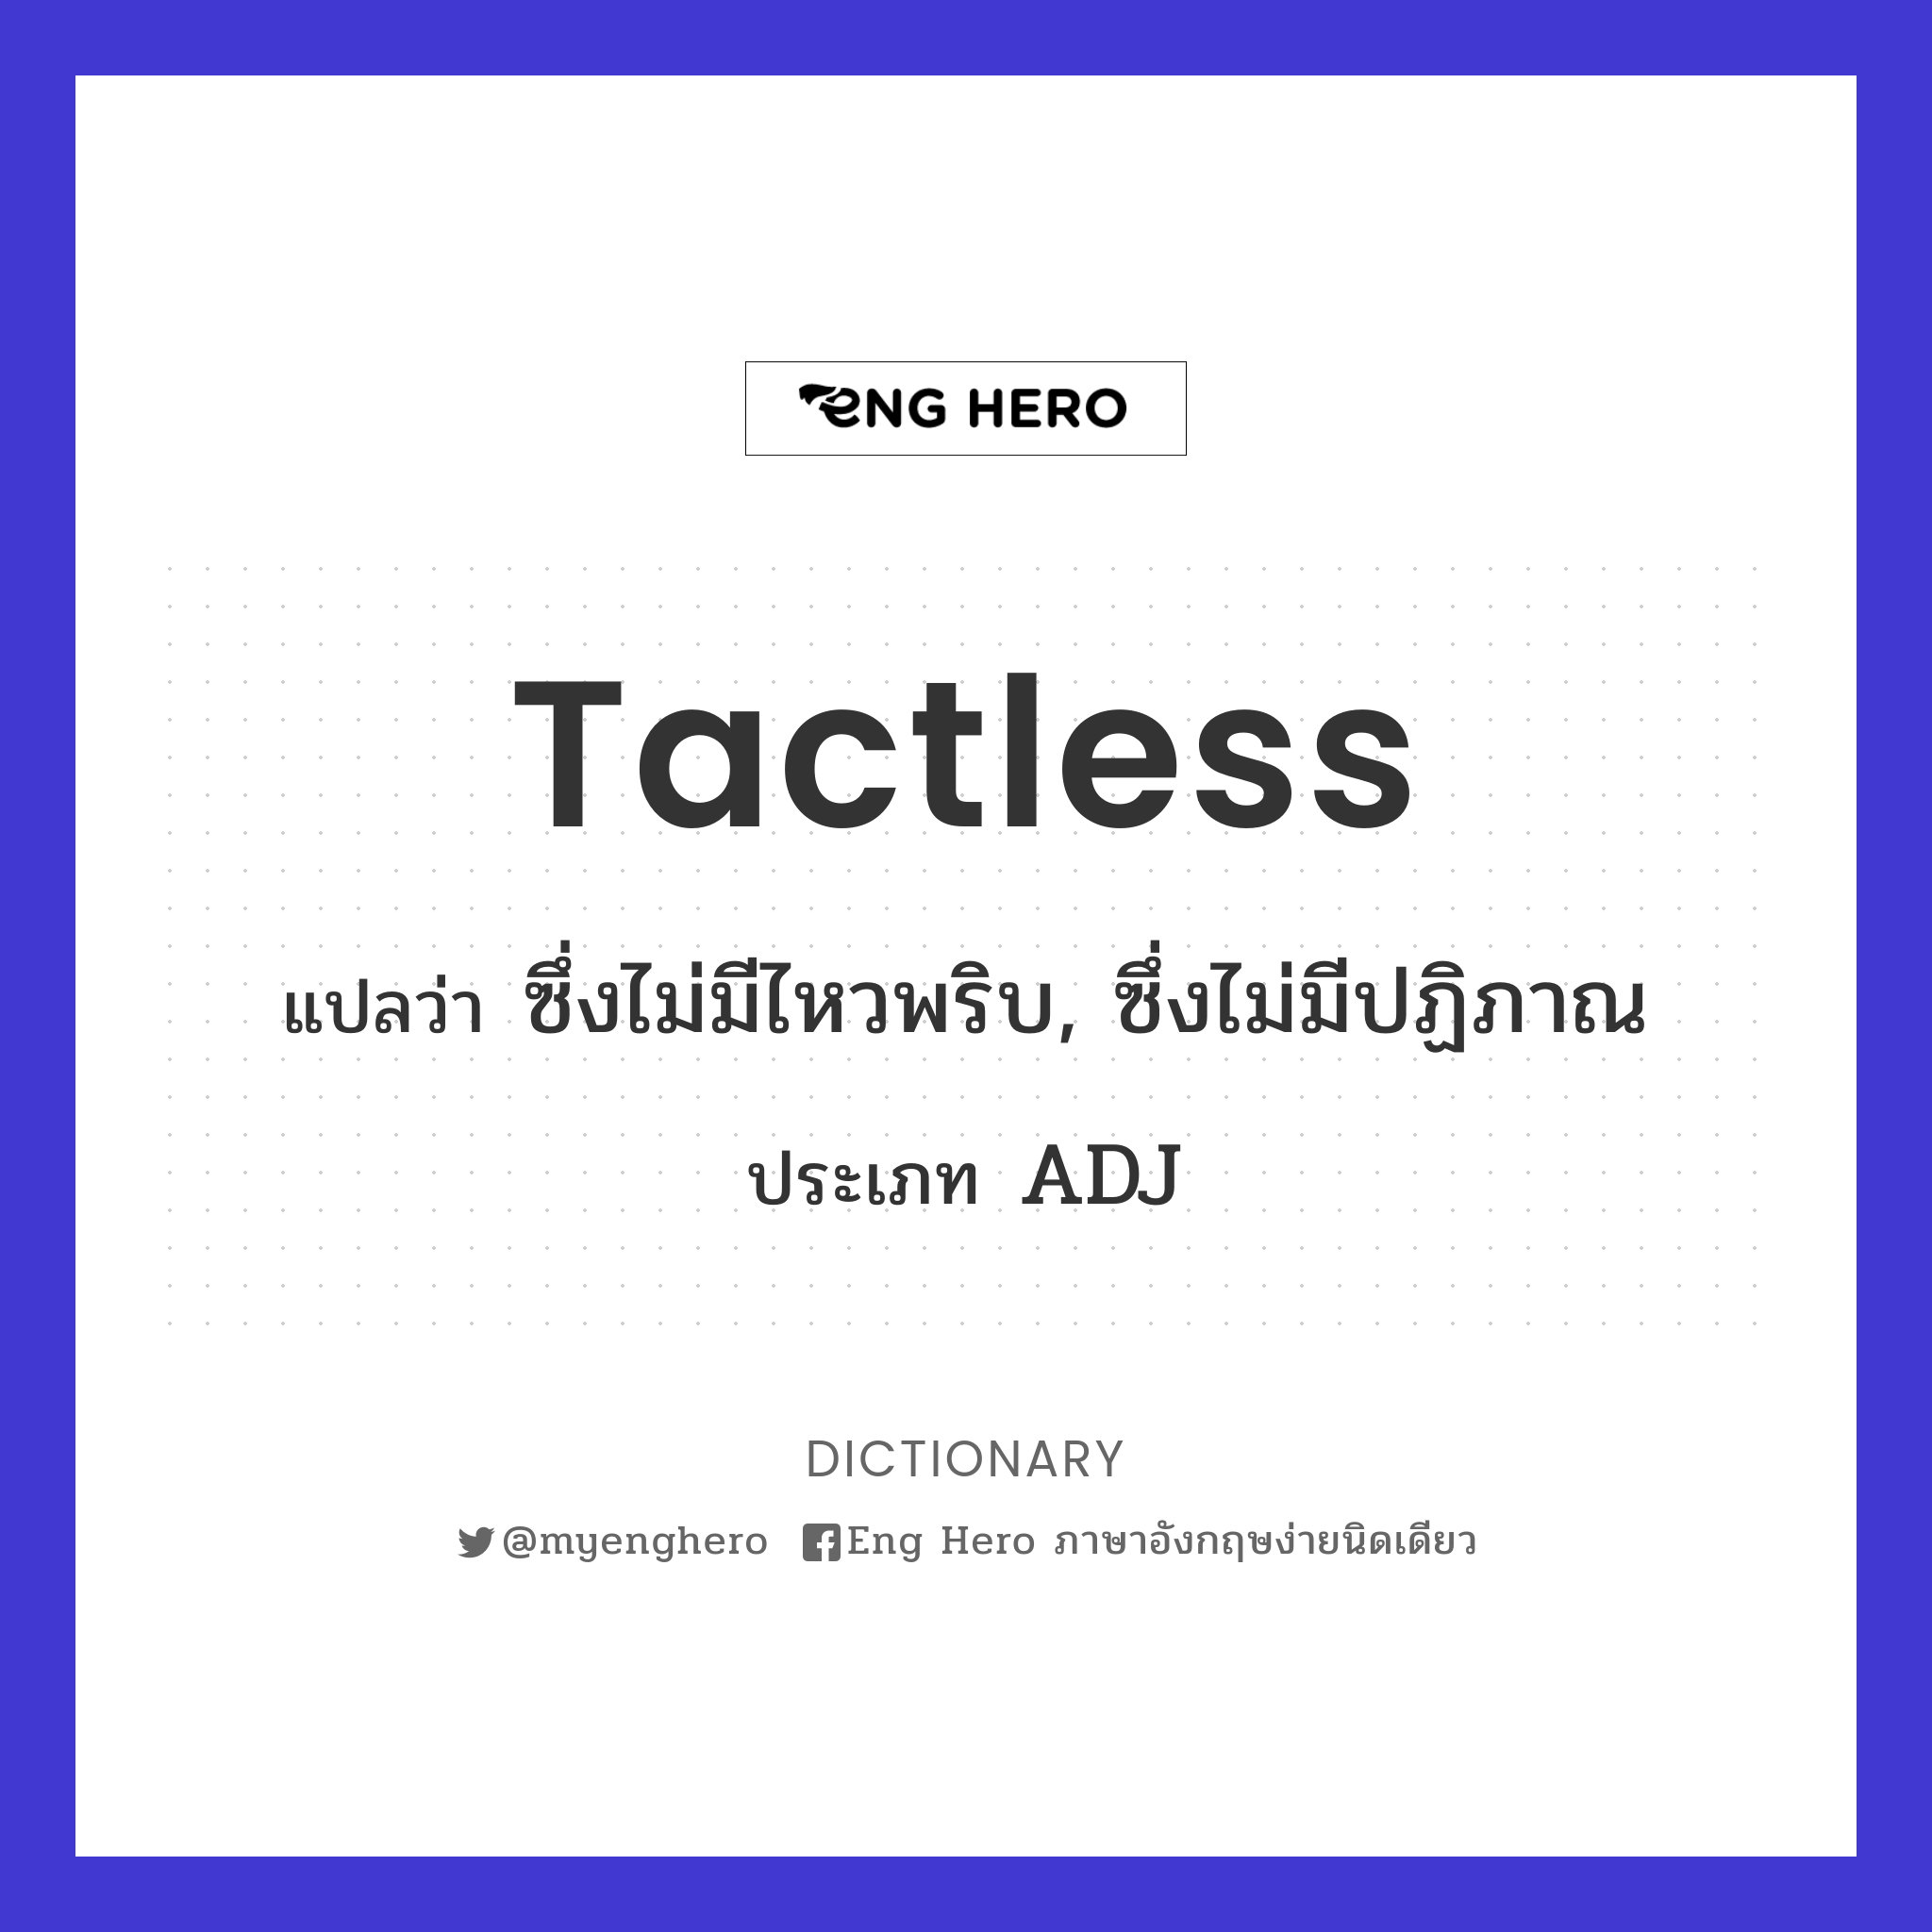 tactless